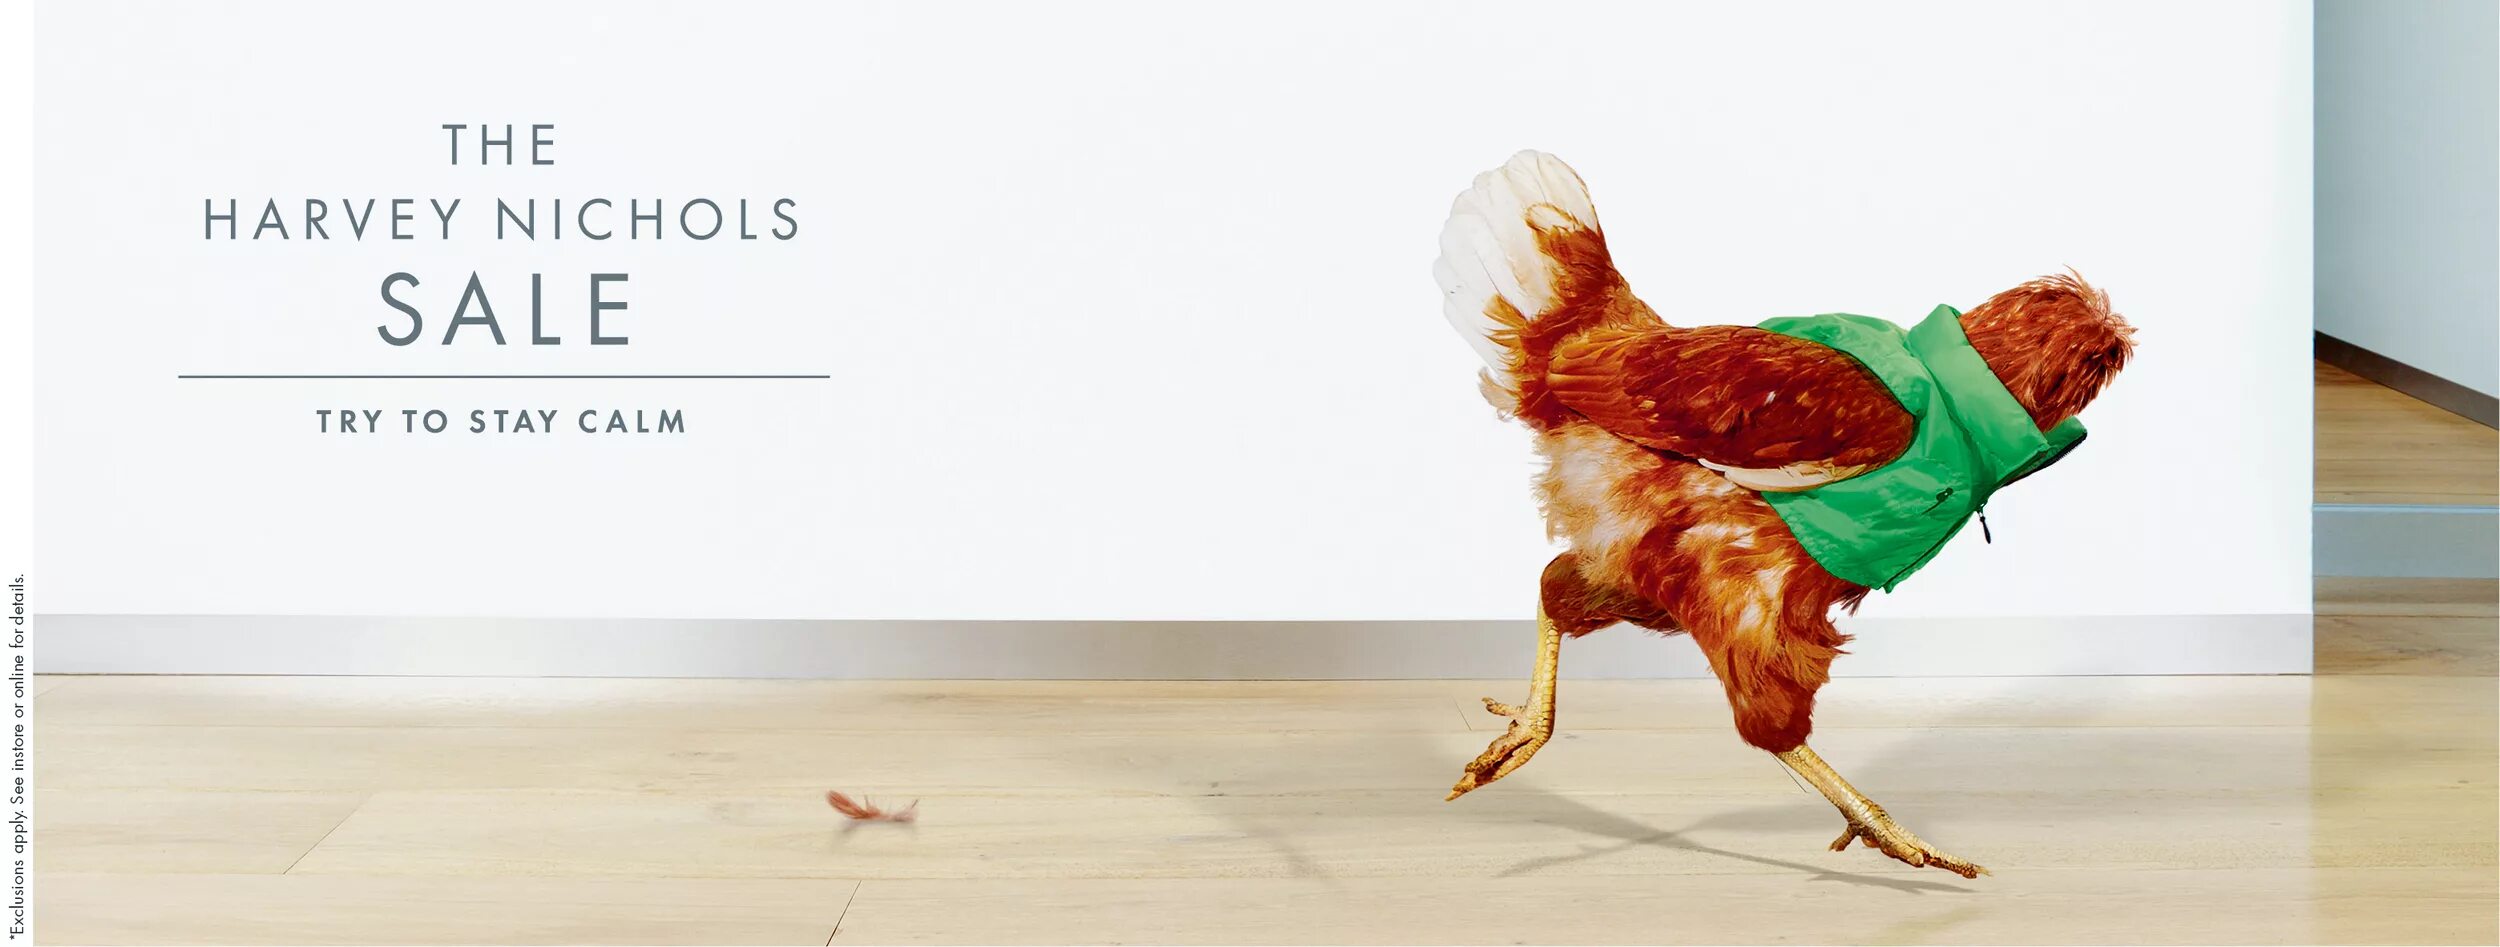 Реклама курочки. Harvey Nichols реклама. Курица без головы бегает. Креативная реклама курицы.